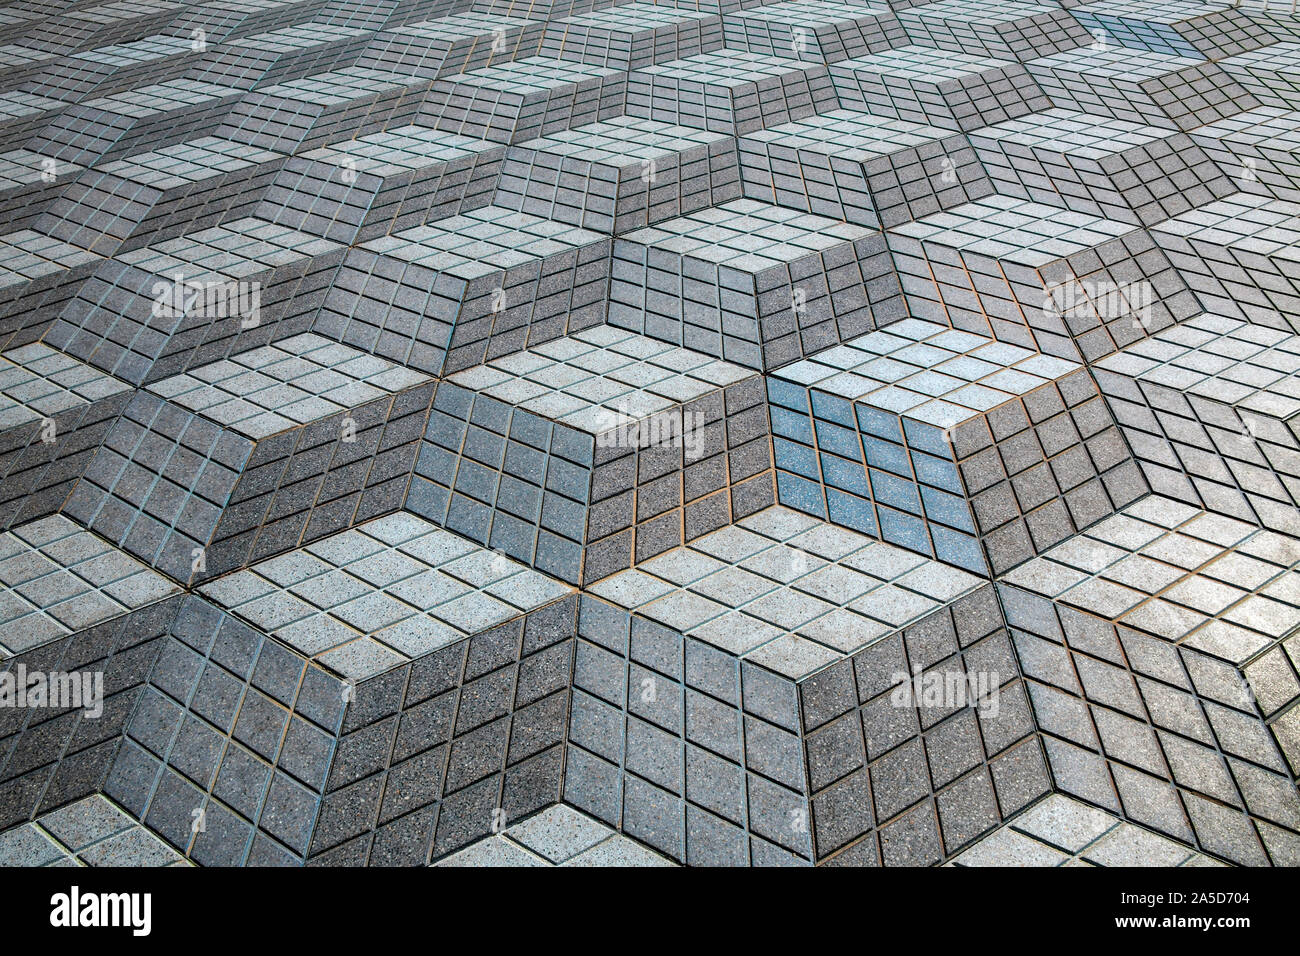 Alicante. Spain. 07.01.12. Floor tile design in the style of M.C. Escher in Alicante in the Costa Blanca region of Spain. Stock Photo